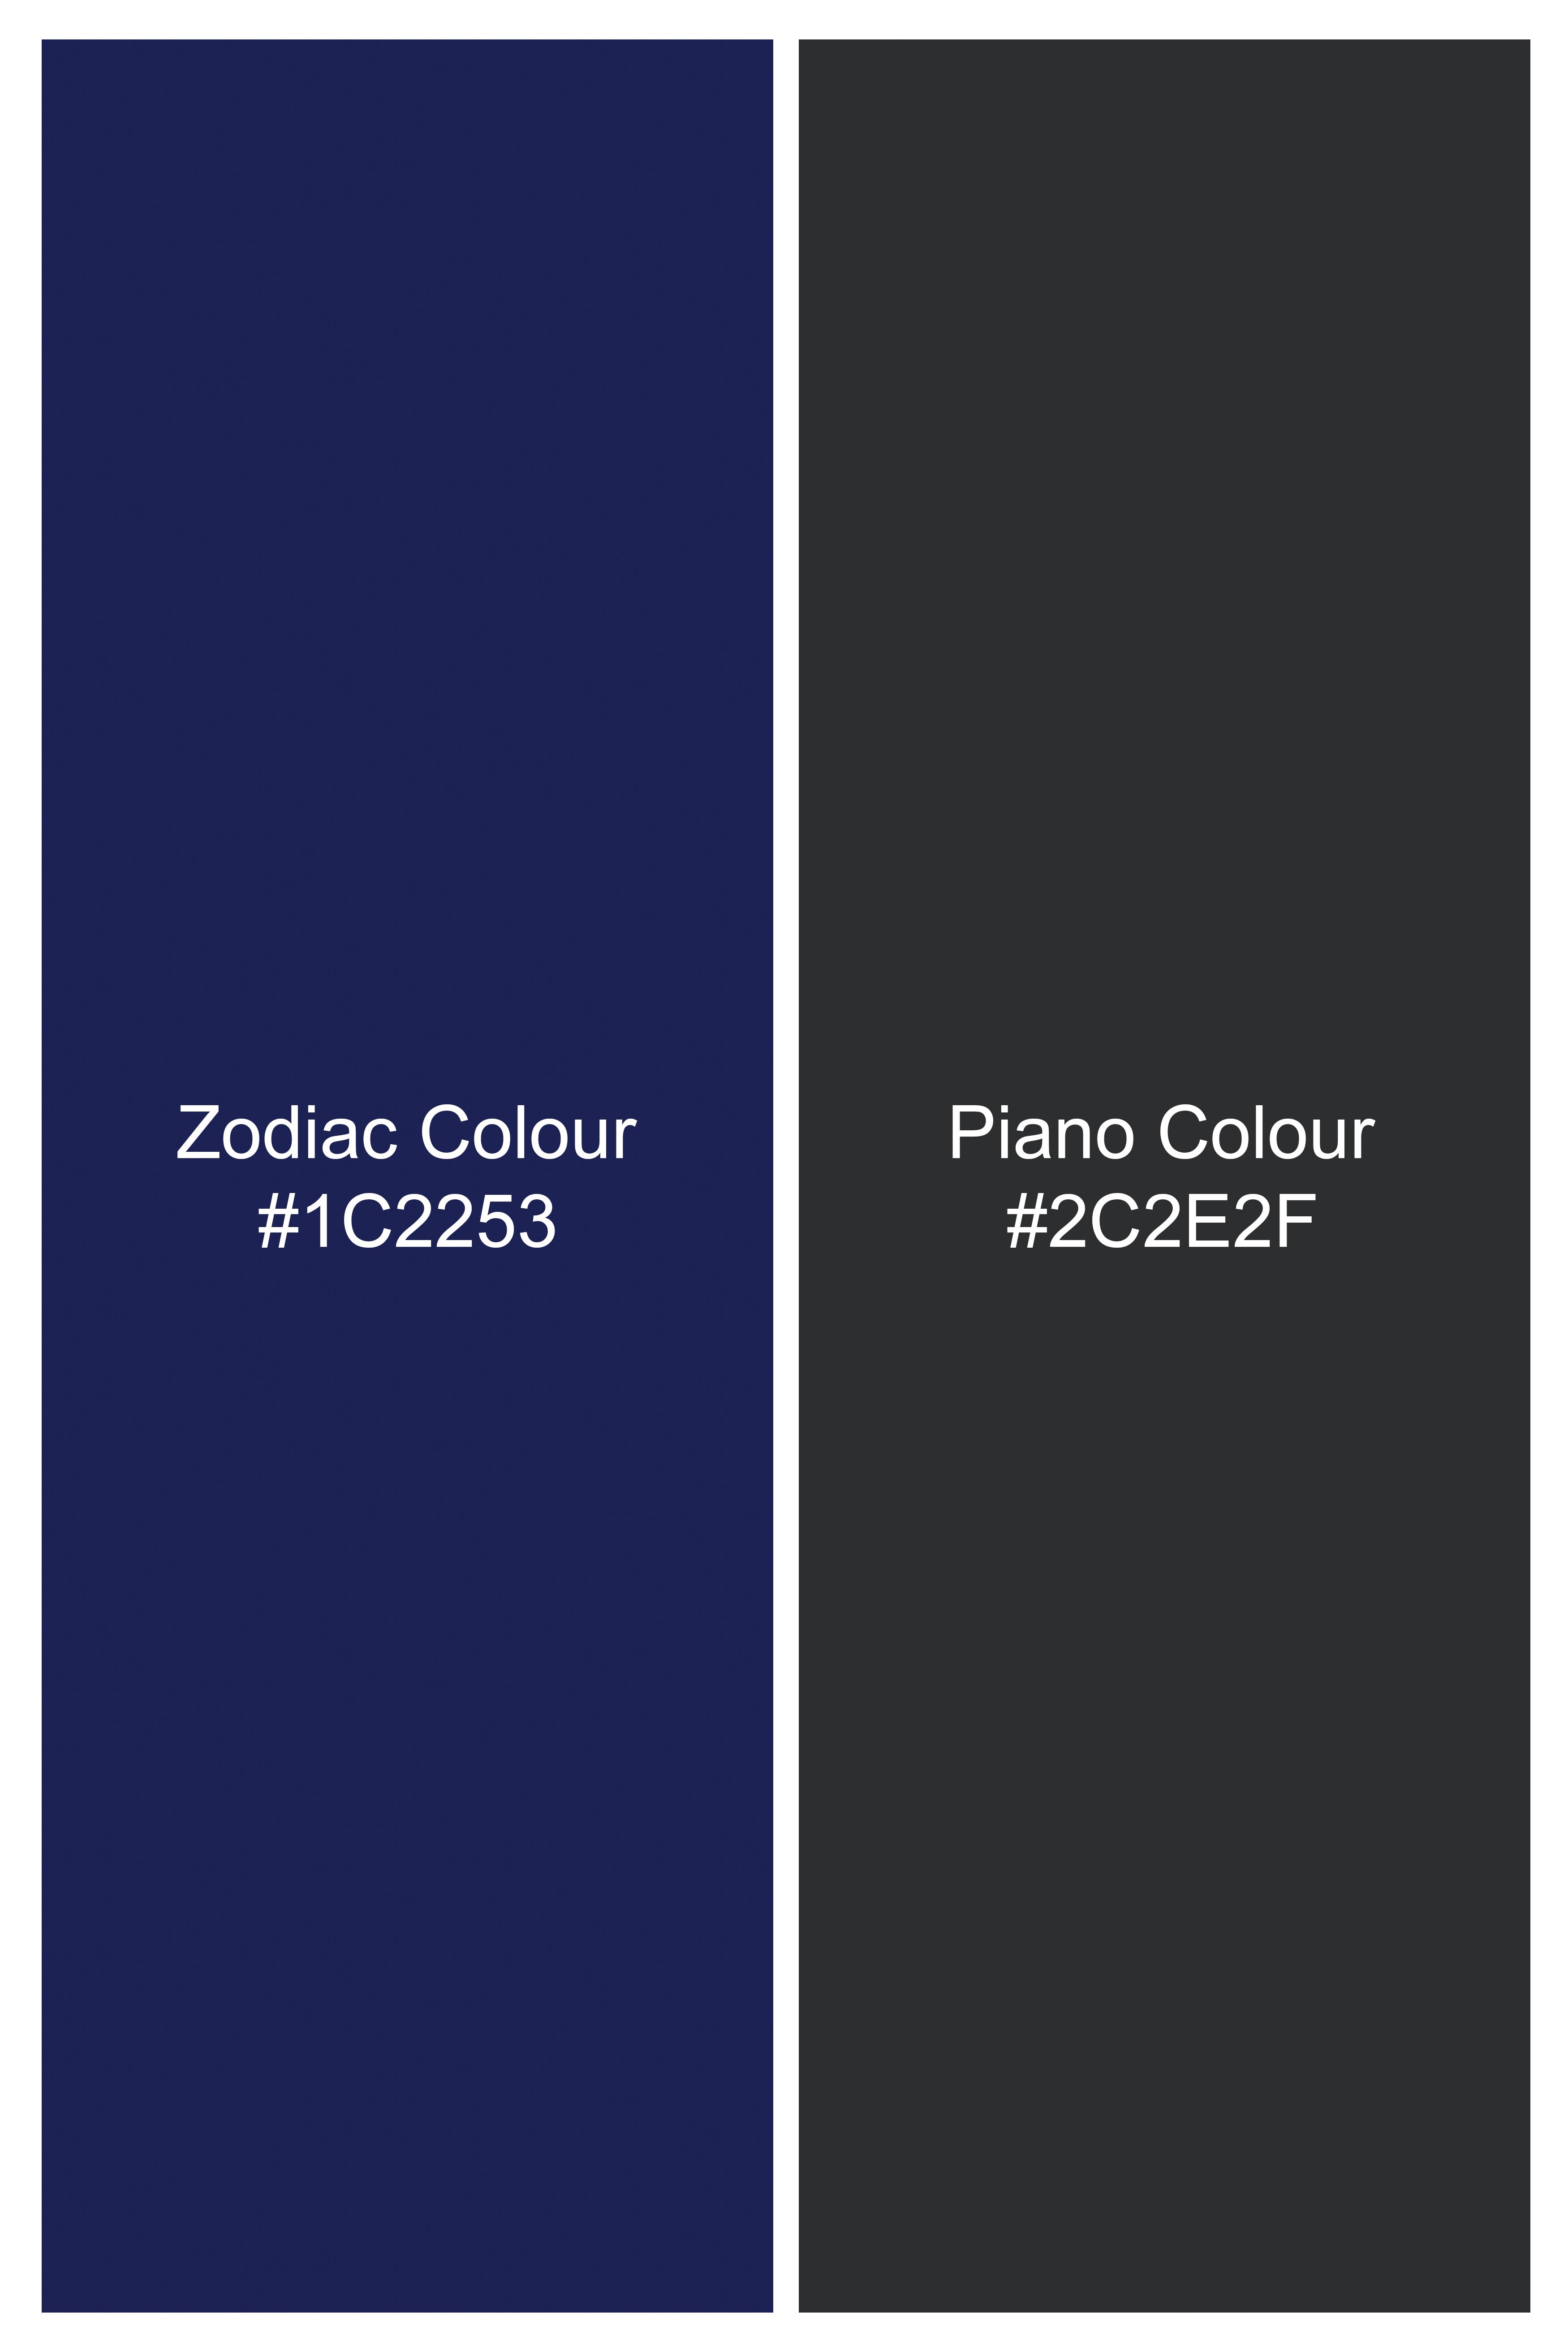 Zodiac Blue and Piano Green Plaid Tweed Pant